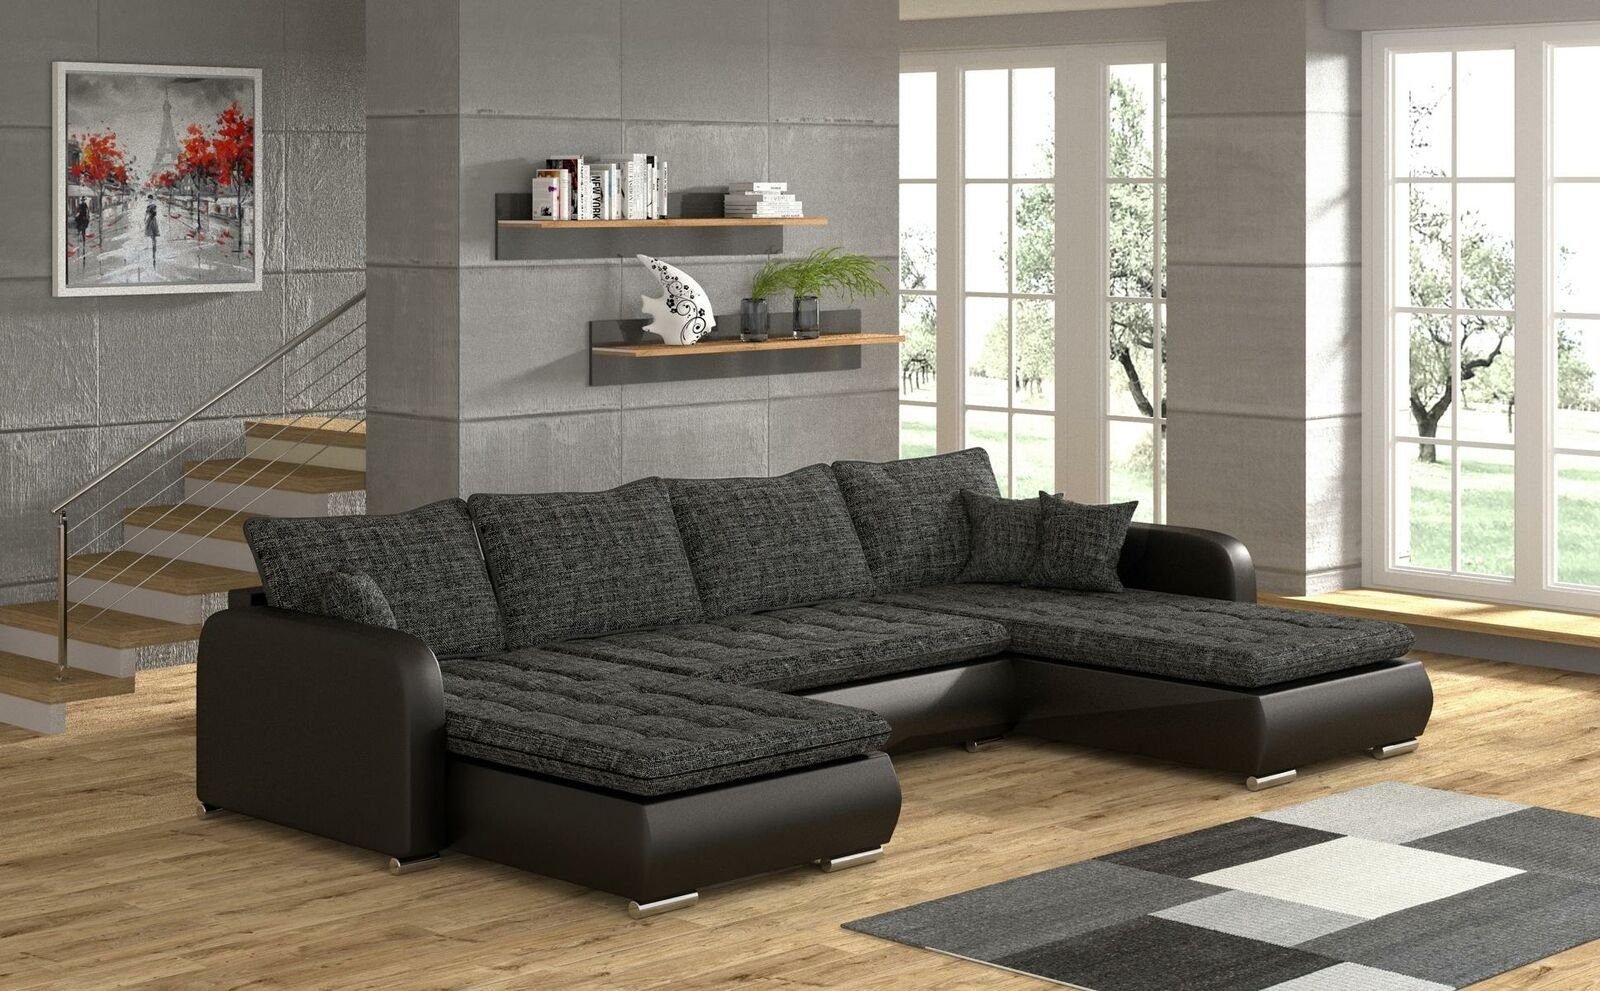 JVmoebel Sofa, Design Ecksofa U-form Bettfunktion Couch Leder Textil Sofa  Neu